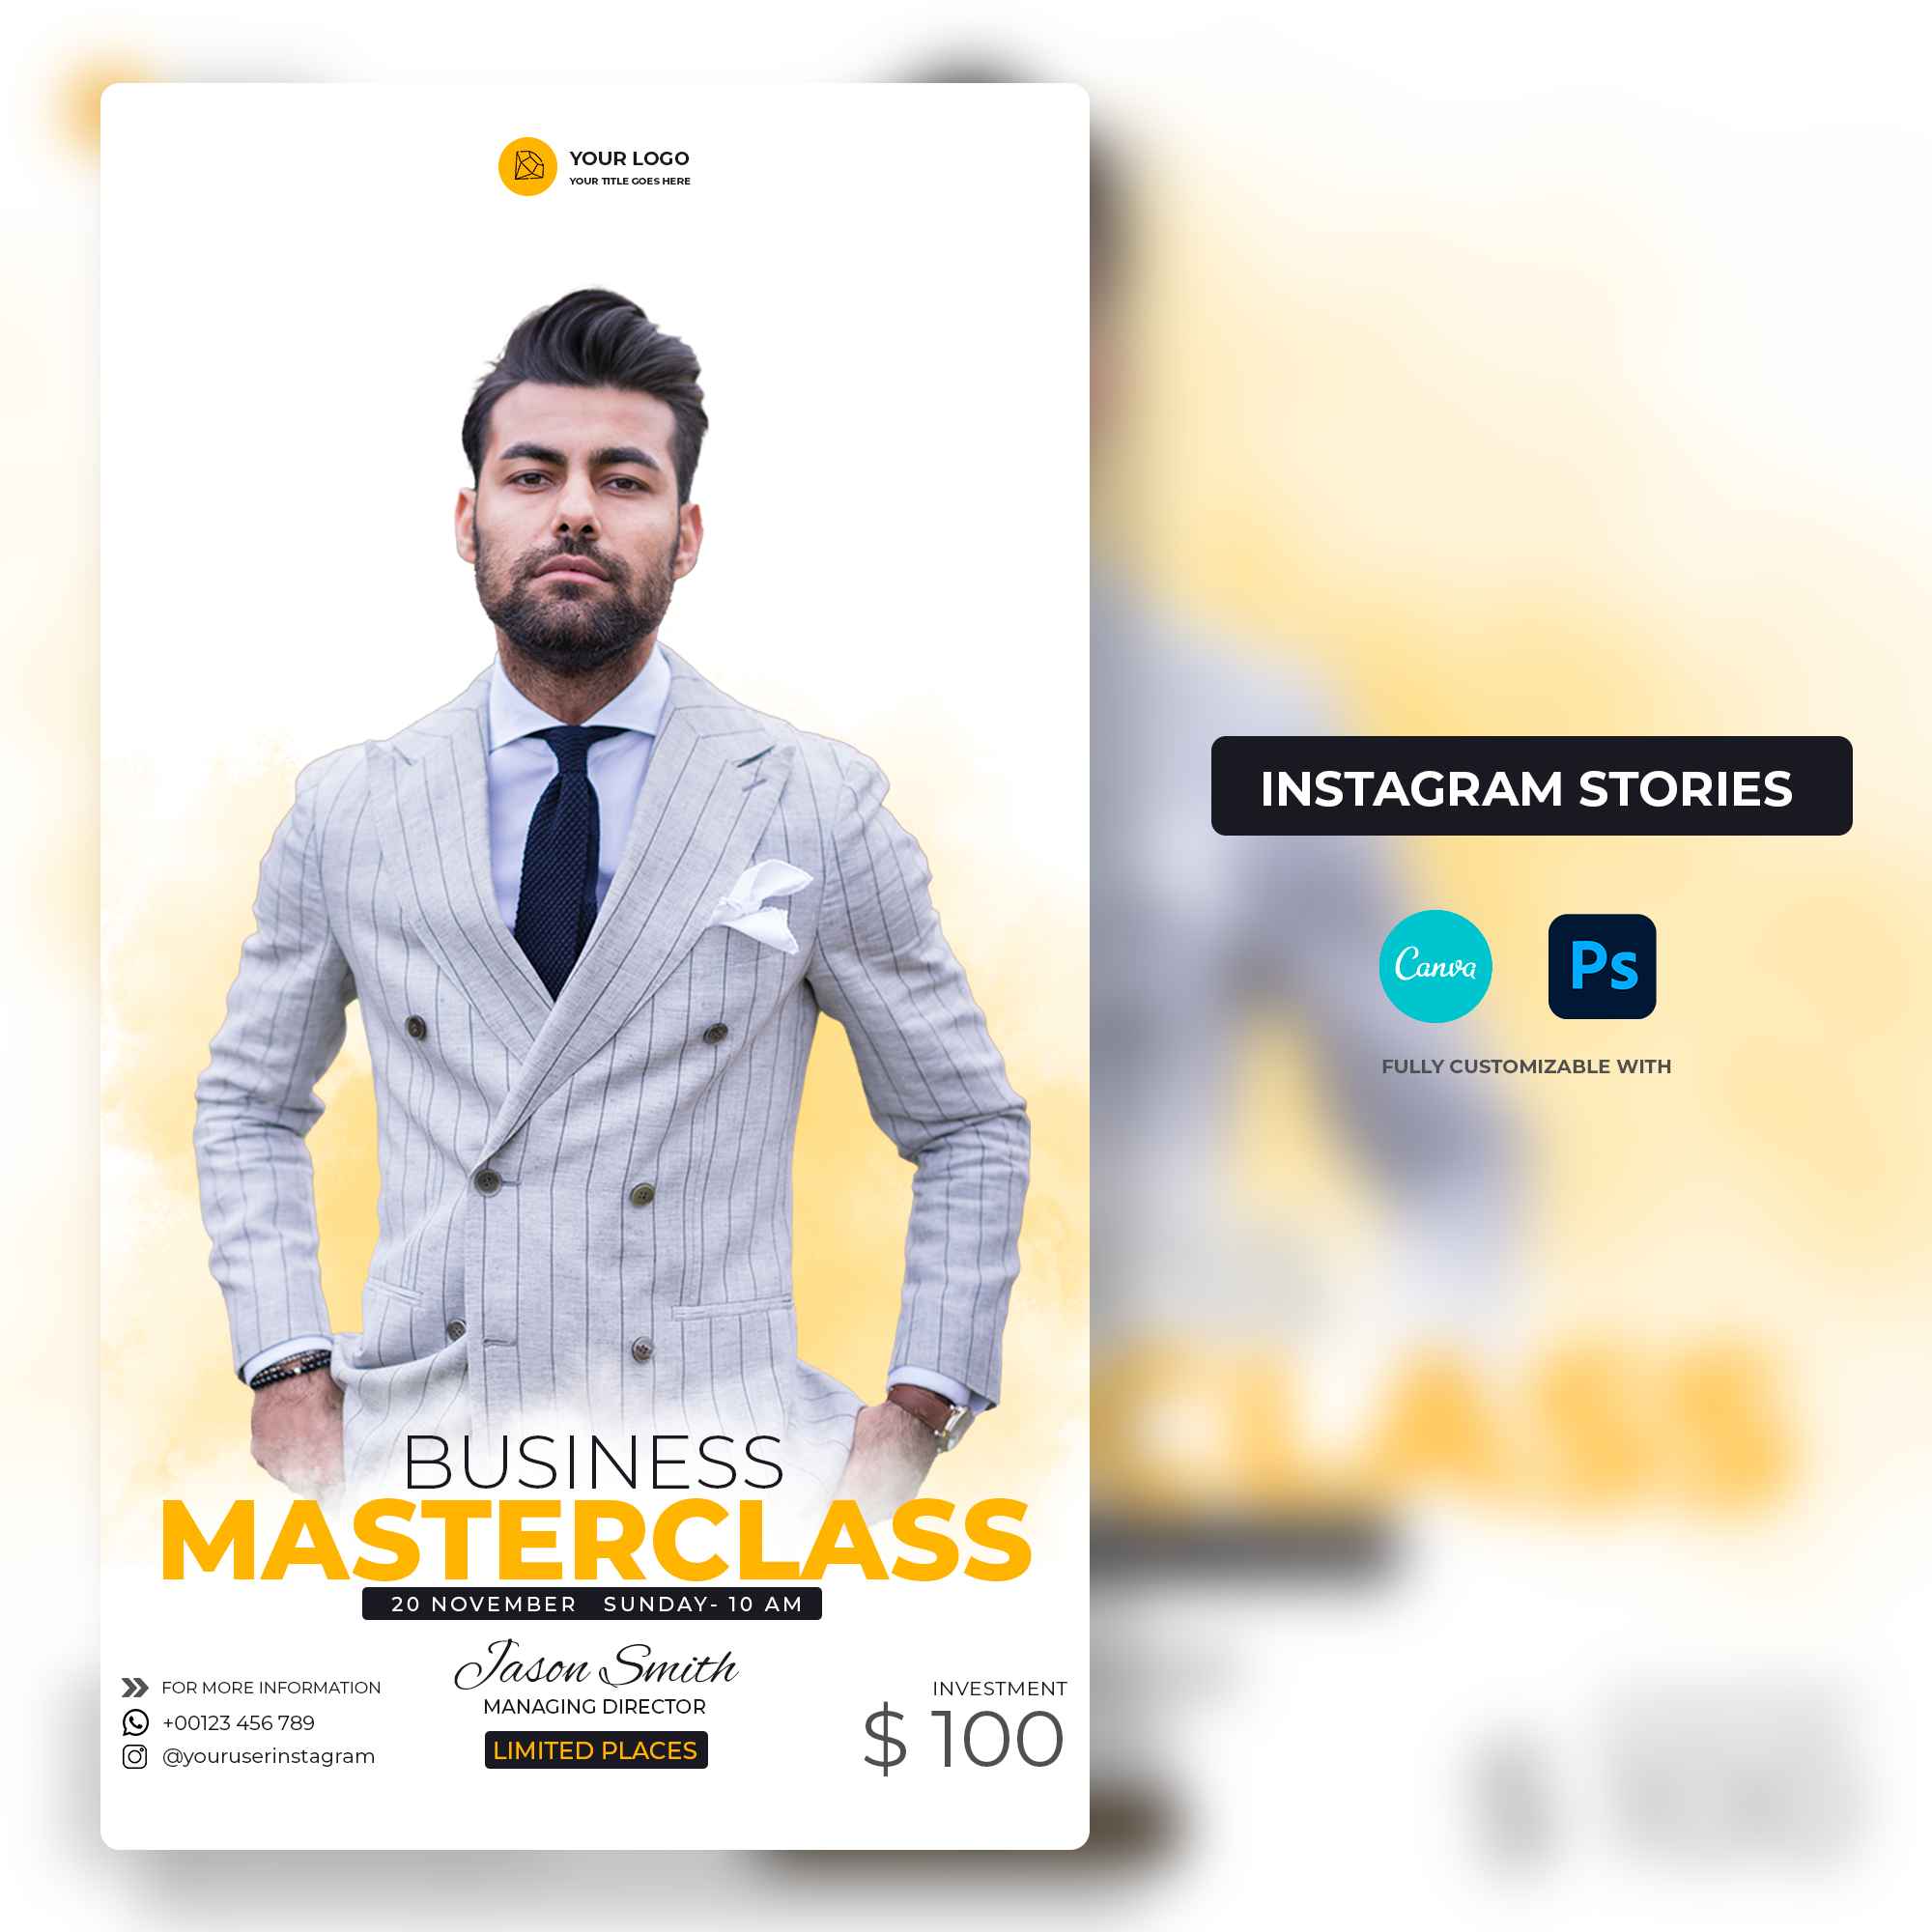 Masterclass Social Media Flyer preview image.